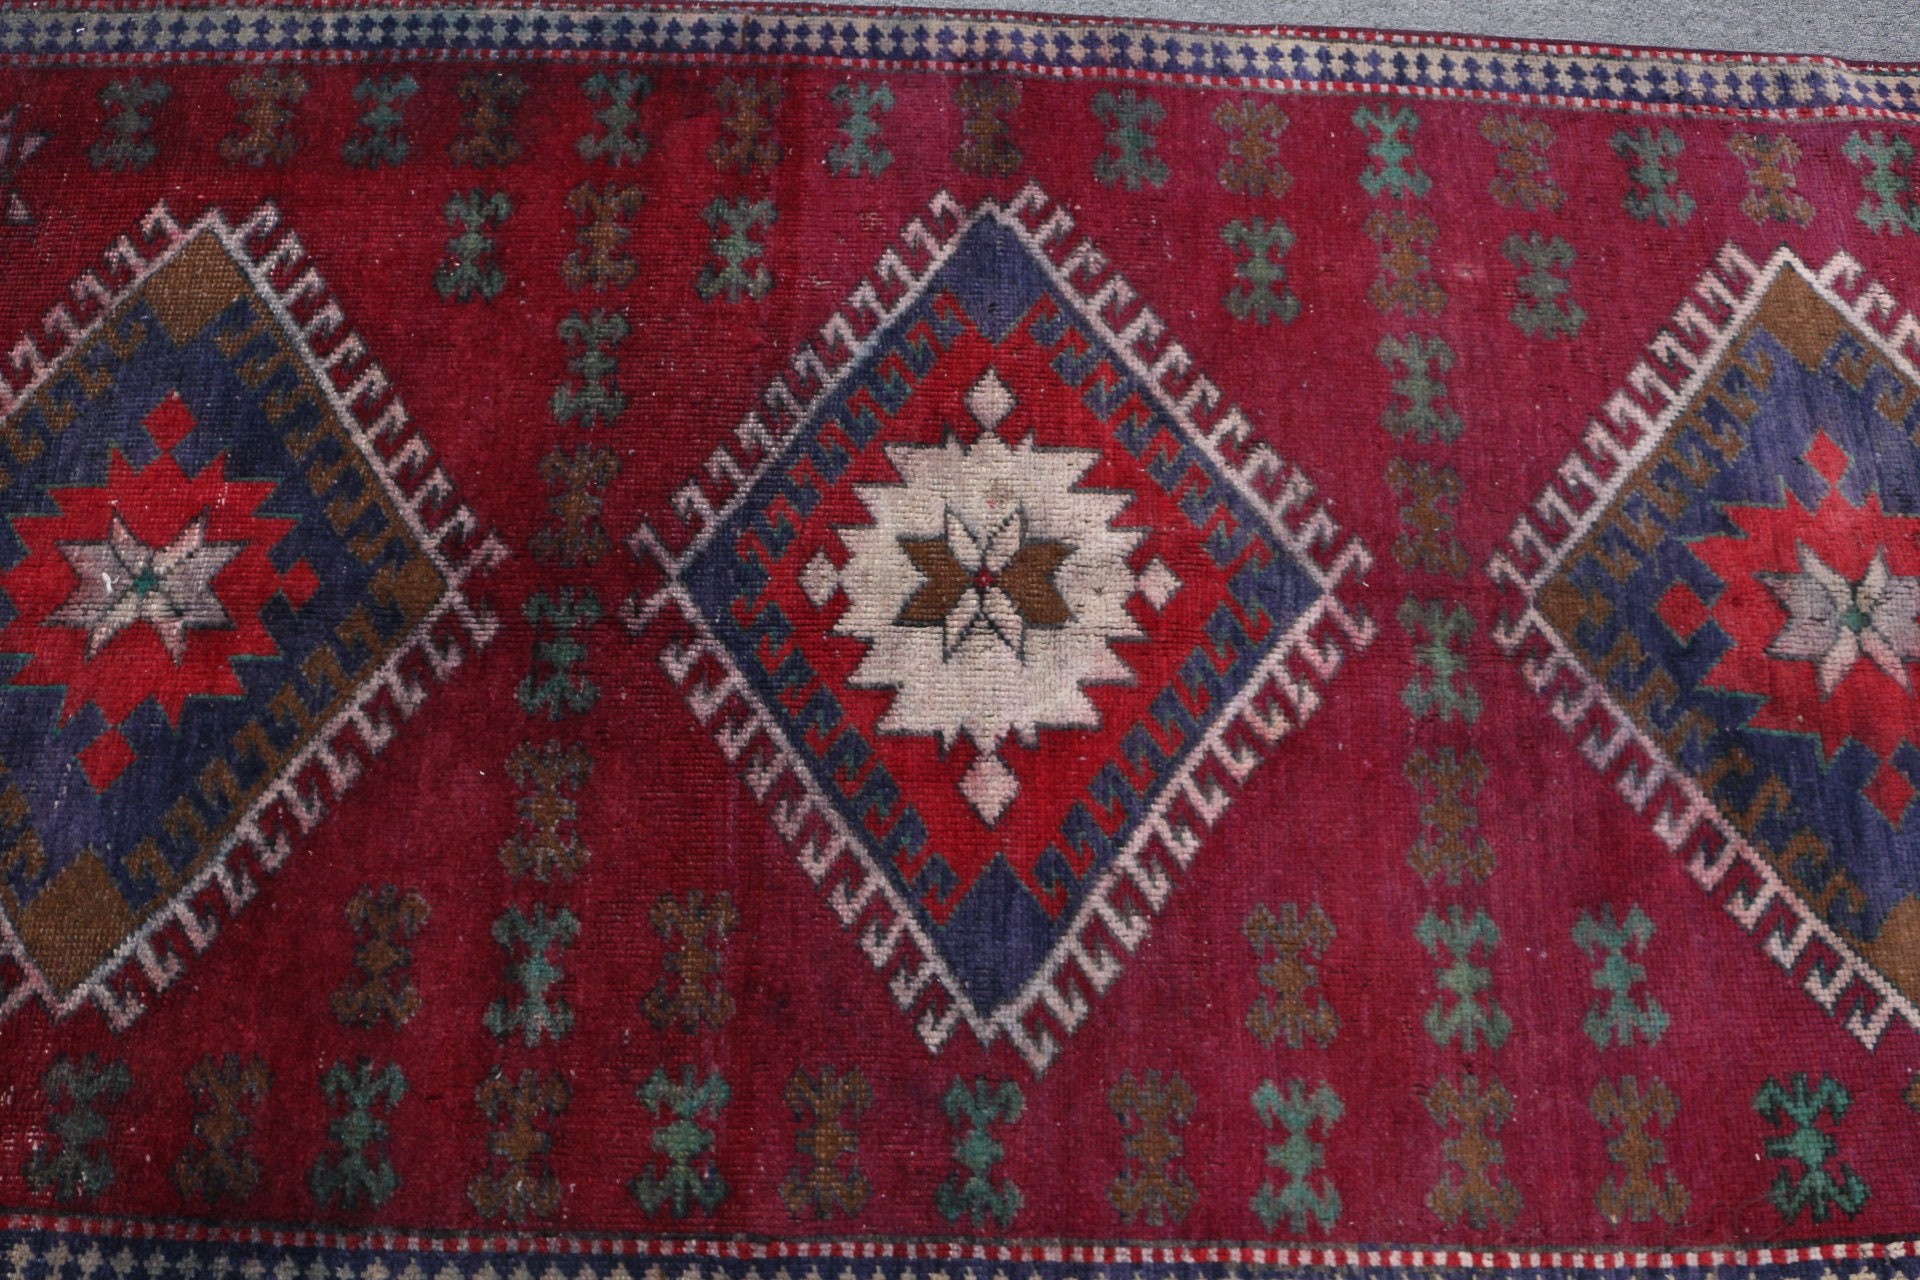 Vintage Rug, Kitchen Rug, Purple Oriental Rug, Turkish Rug, Antique Rugs, Moroccan Rugs, 3.2x6.6 ft Accent Rug, Ethnic Rugs, Bedroom Rugs